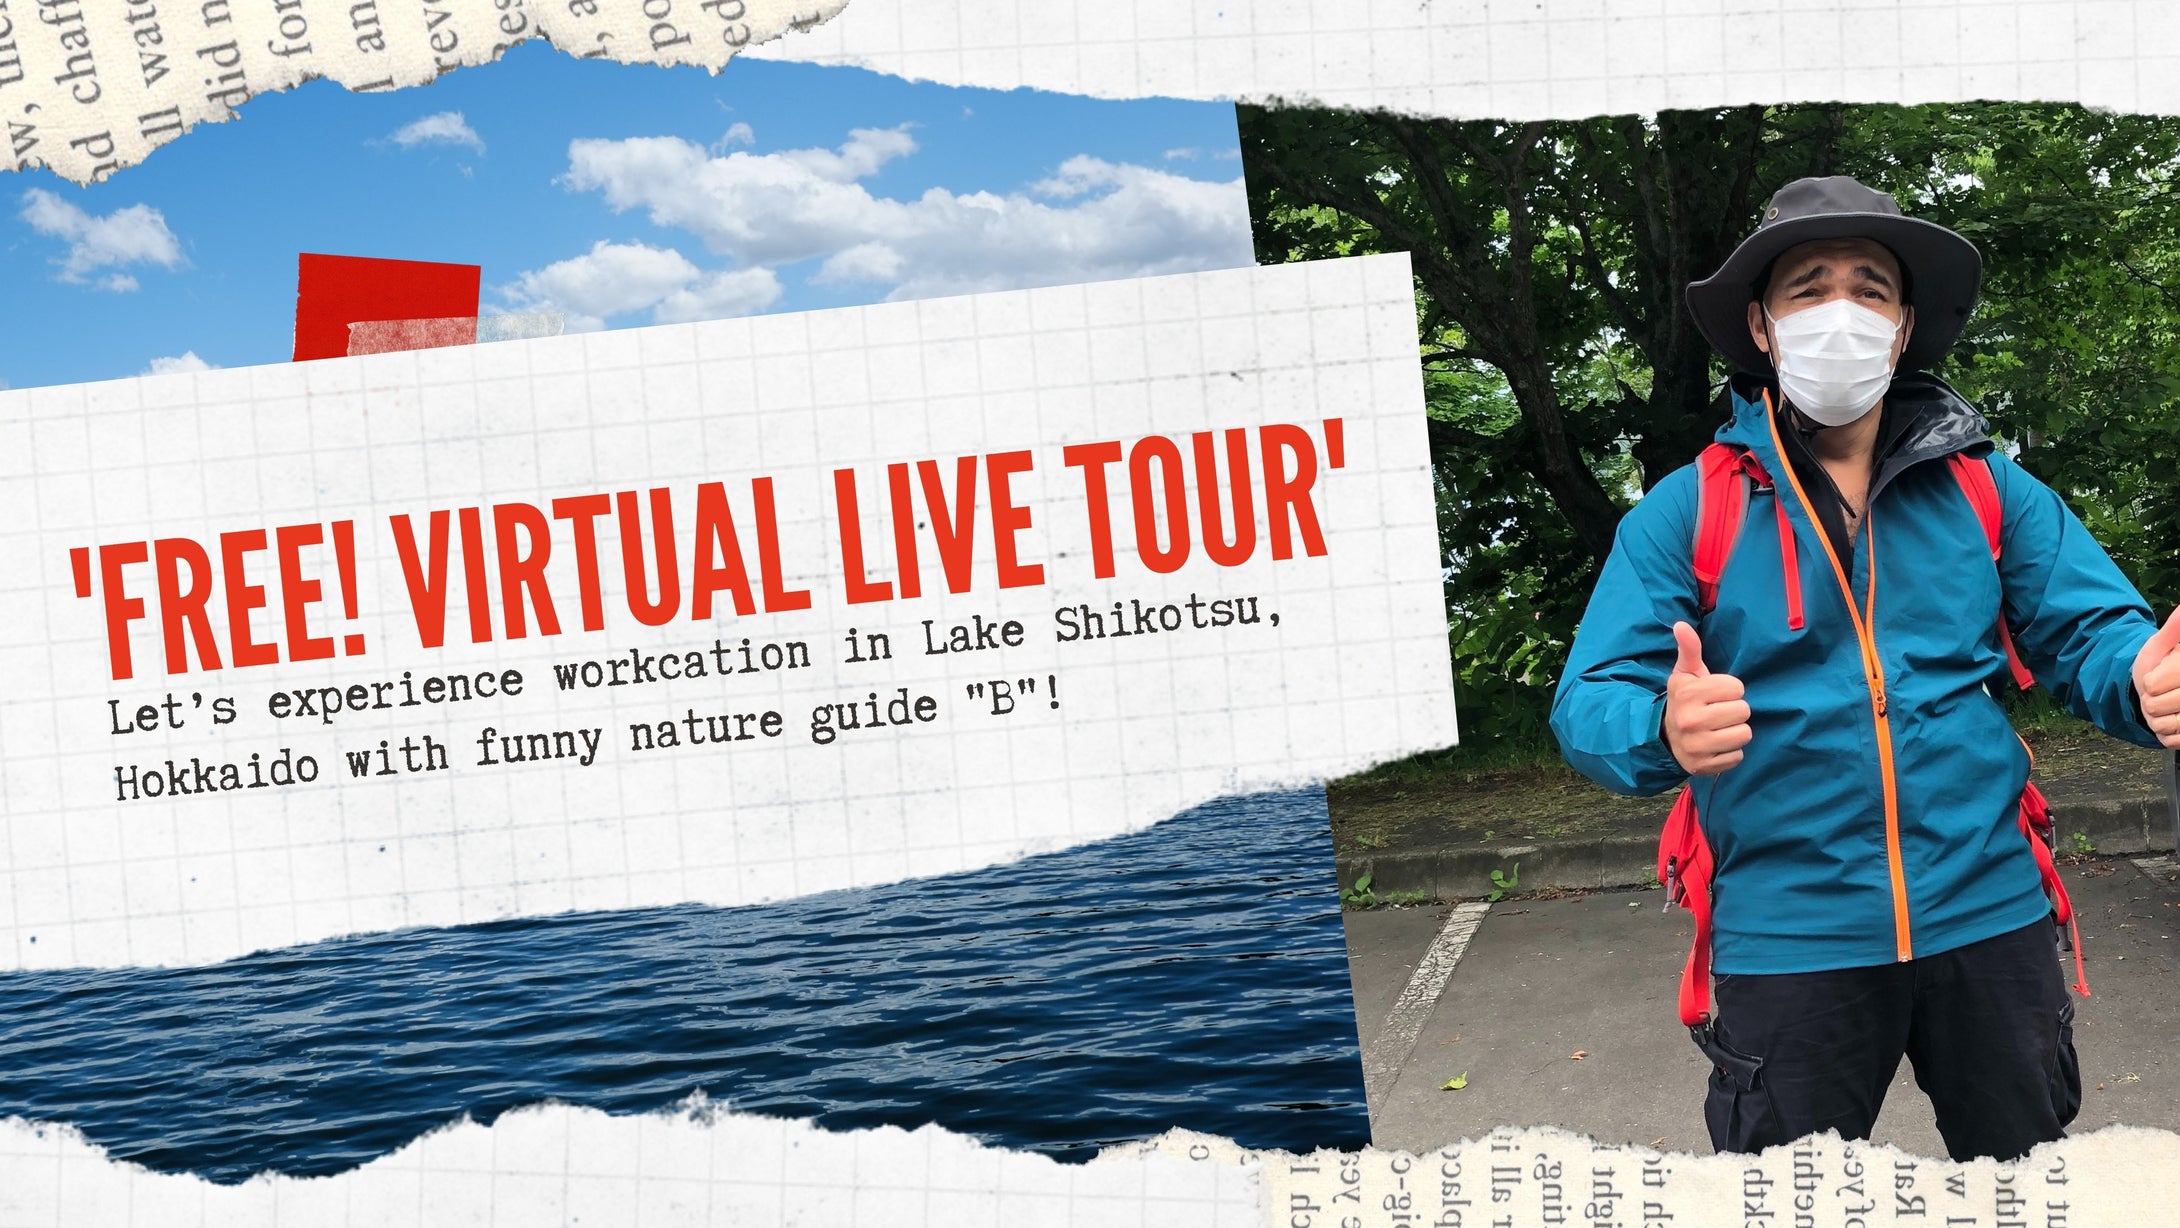 [Hokkaido,Japan] Let’s experience workcation in Lake Shikotsu, Hokkaido with funny nature guide 